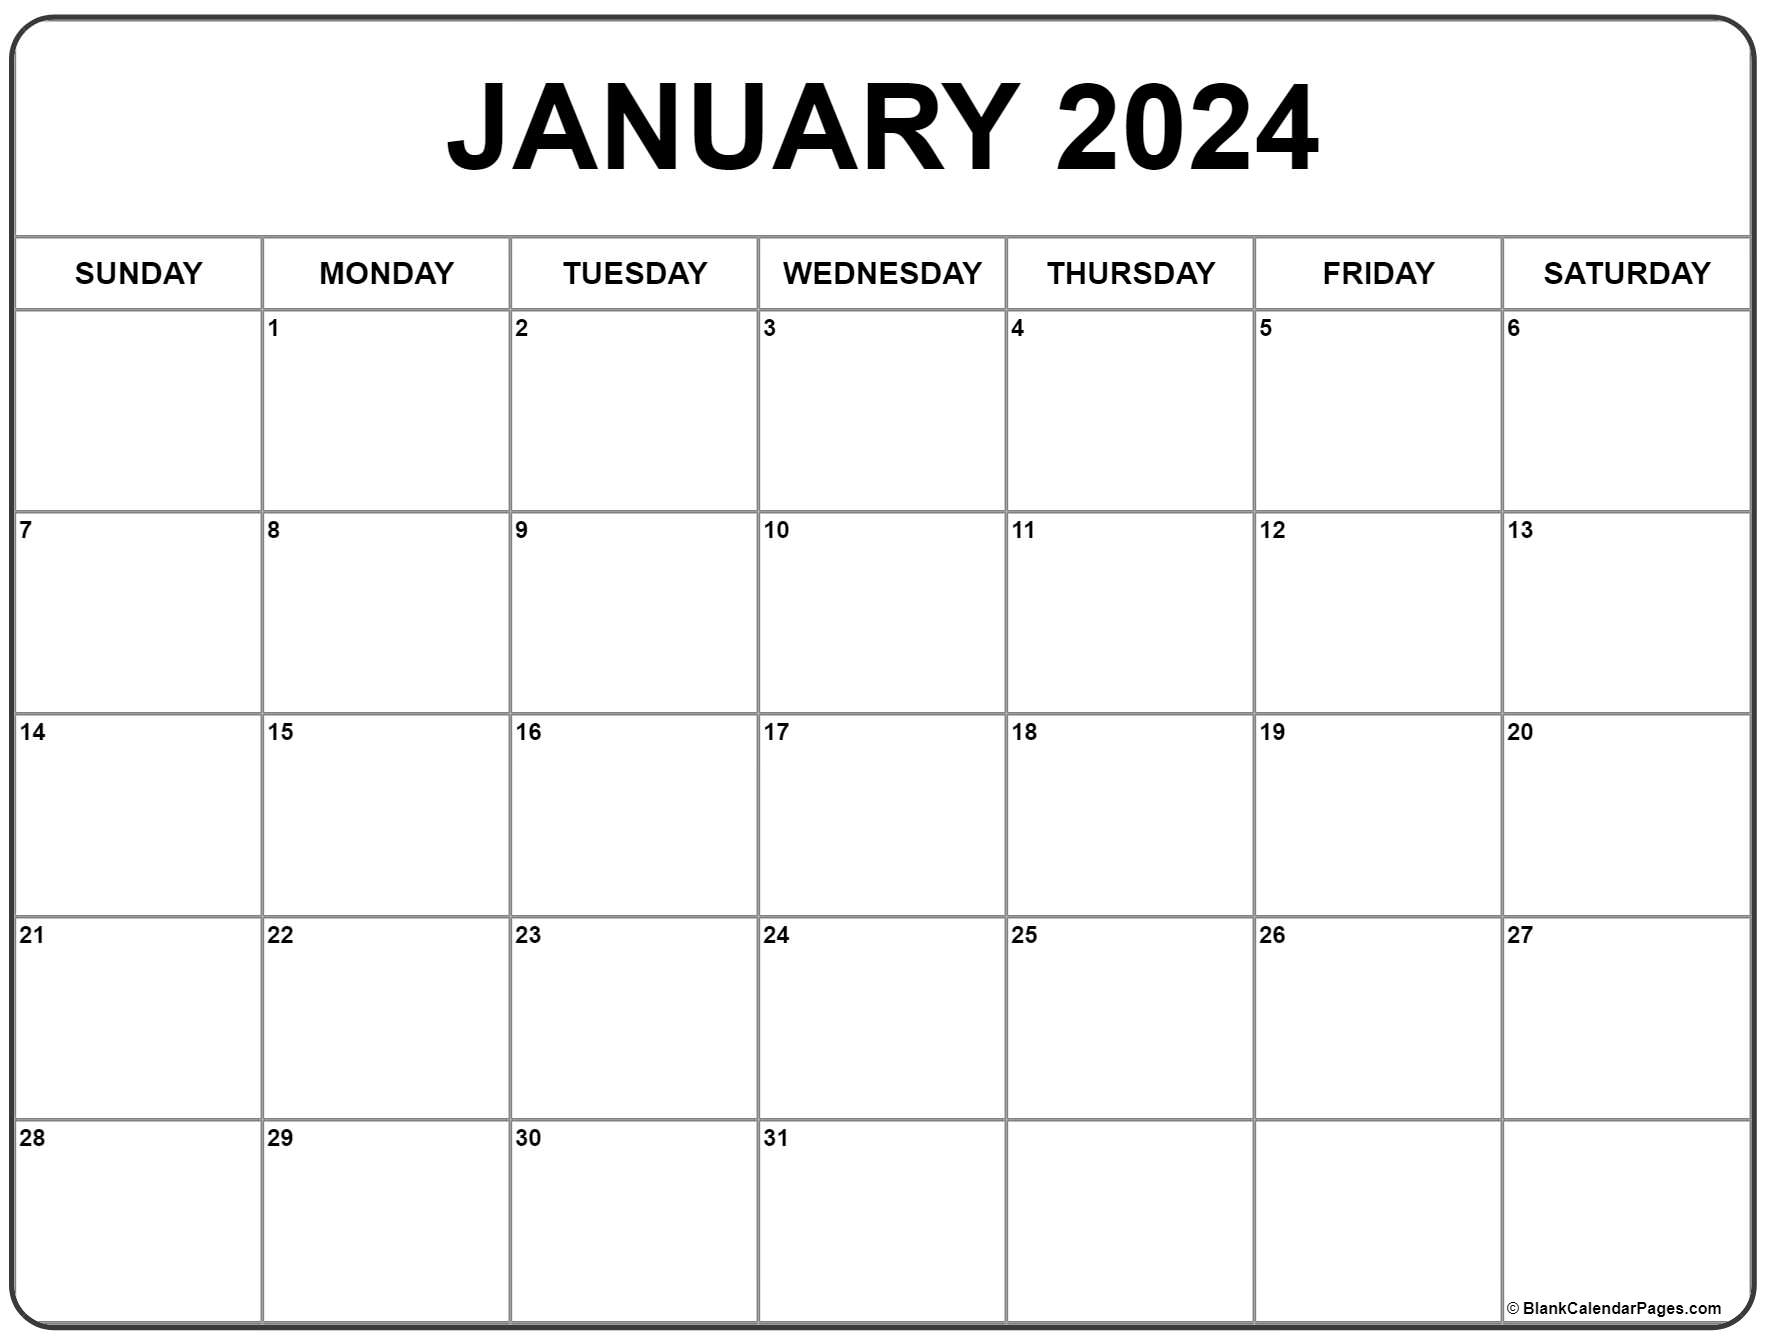 January 2024 Calendar | Free Printable Calendar | January 2024 Calendar Printable